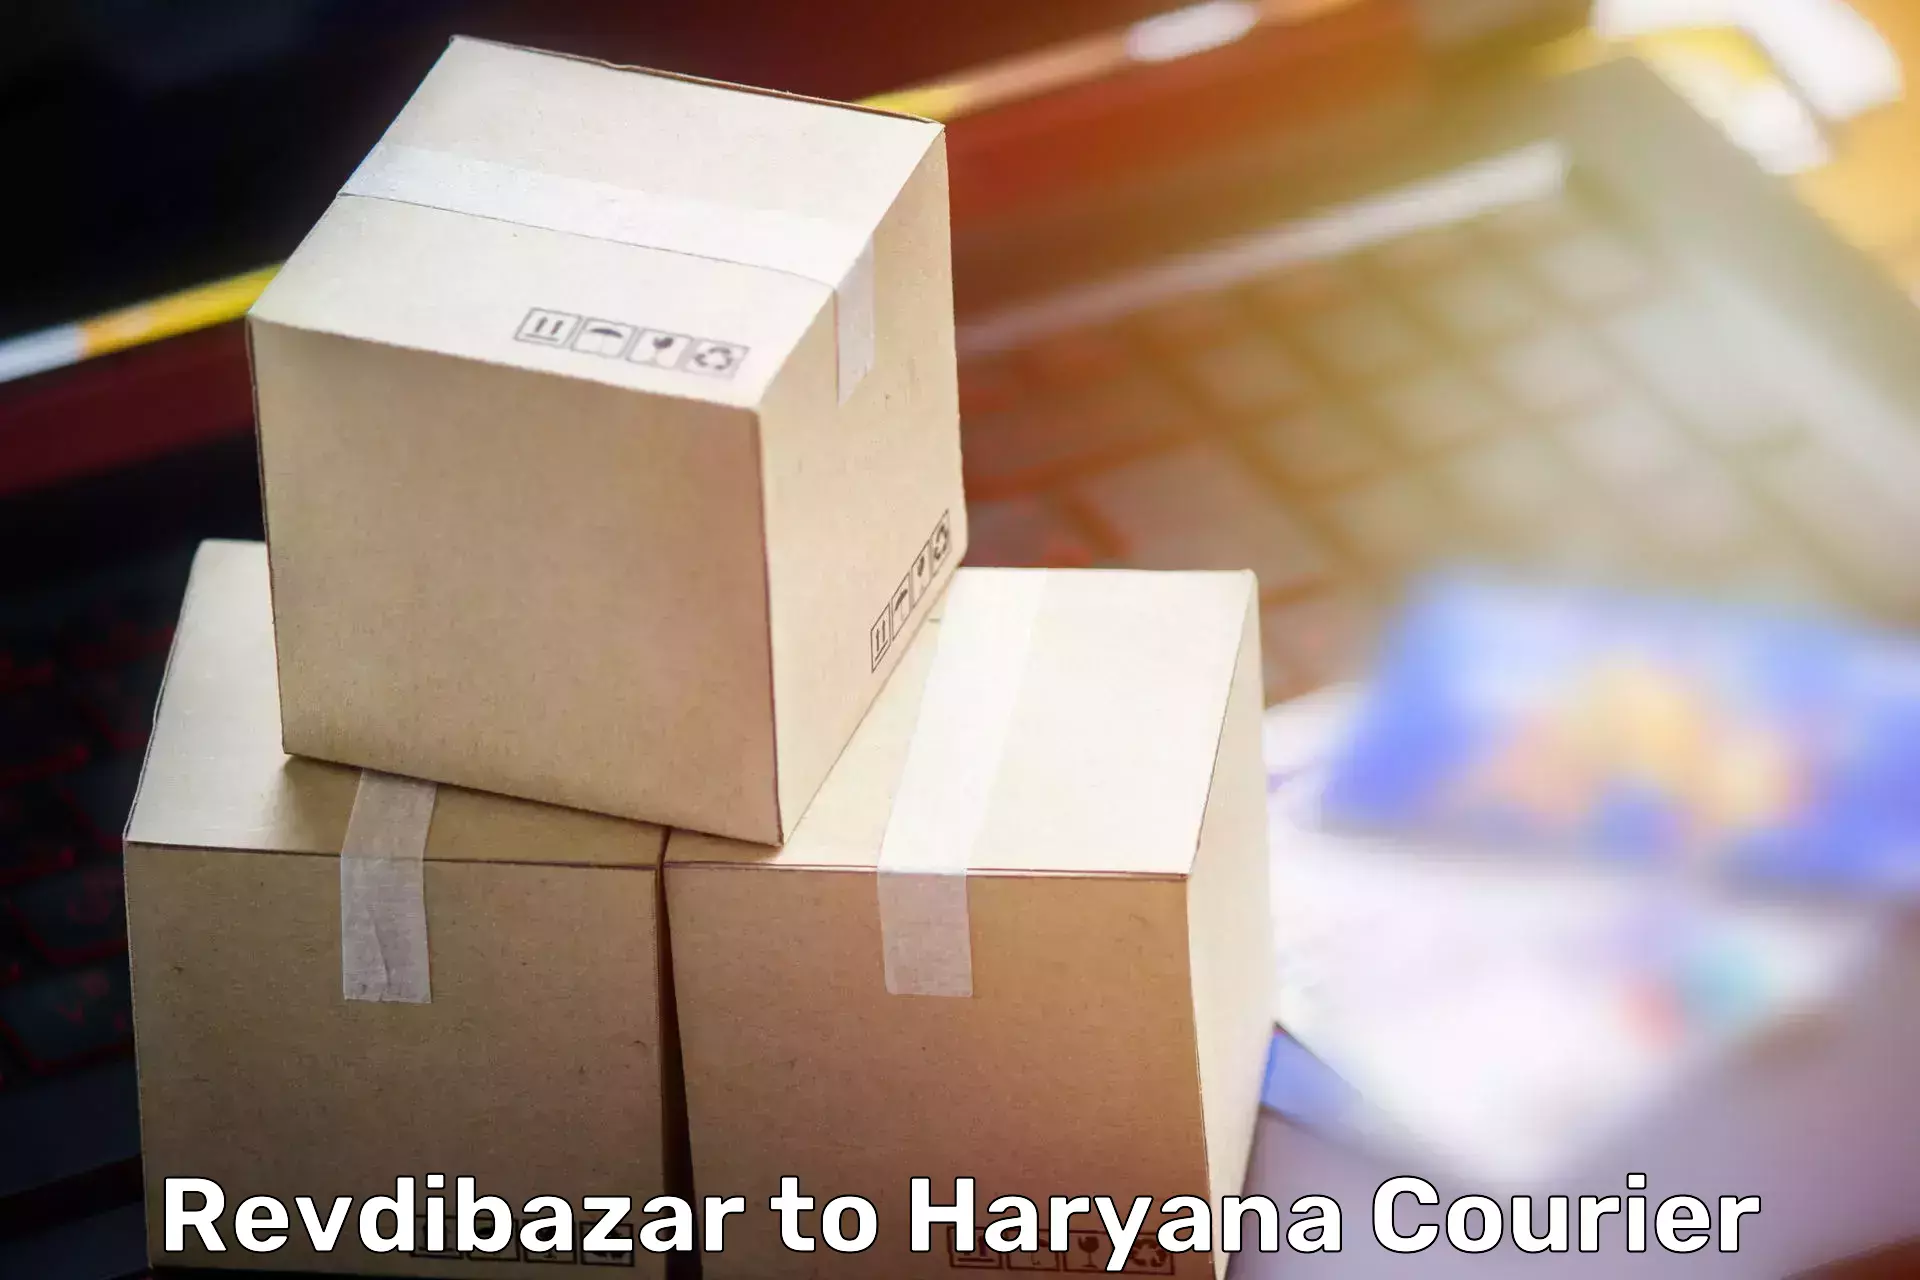 Professional moving company Revdibazar to Bilaspur Haryana